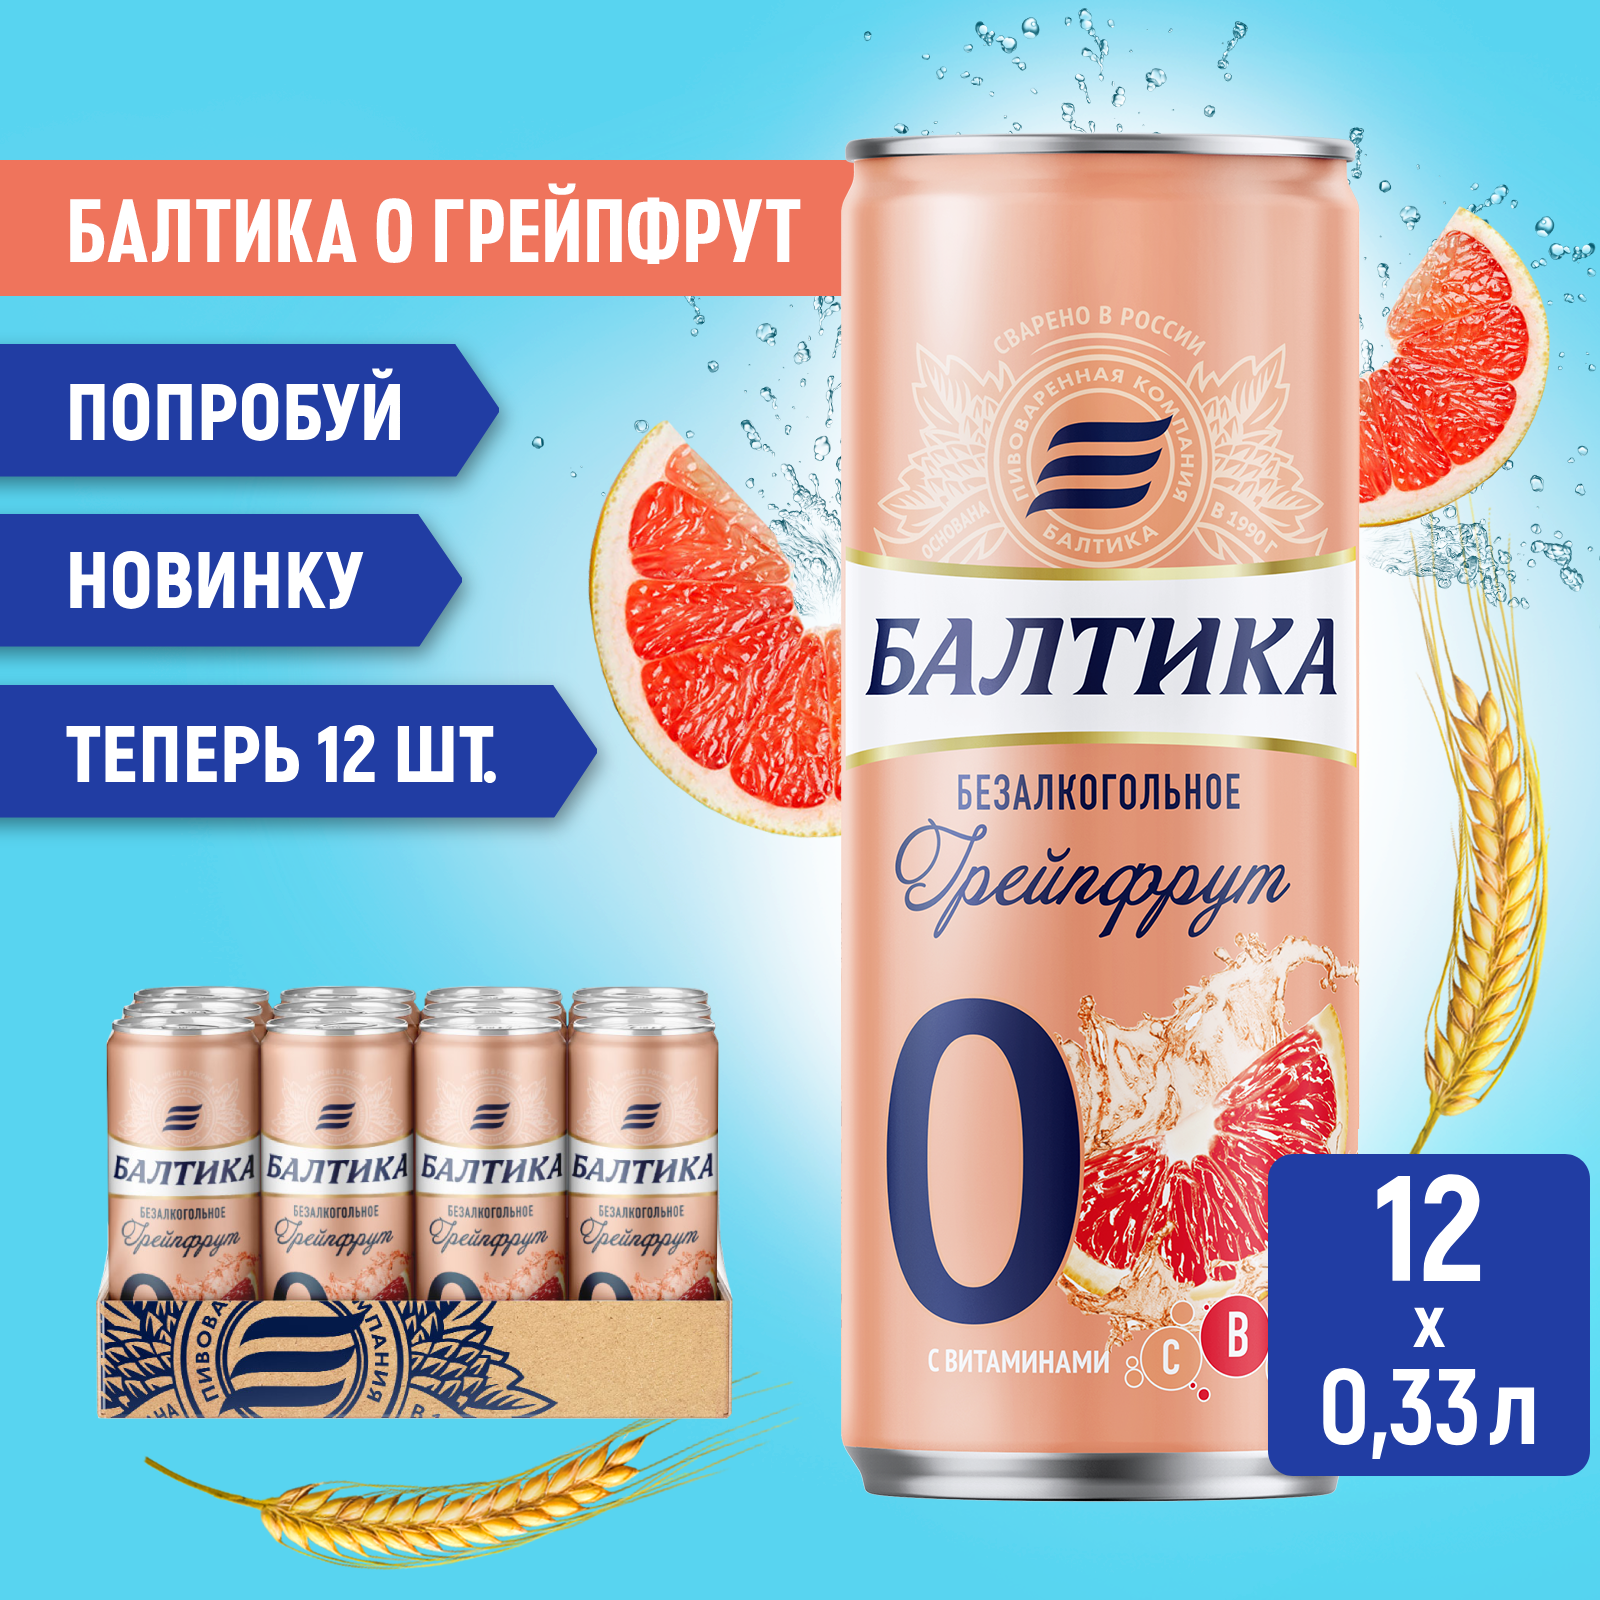 Пивной напиток Балтика №0 Грейпфрут безалкогольное, 12 шт. х 0,33 л, банка